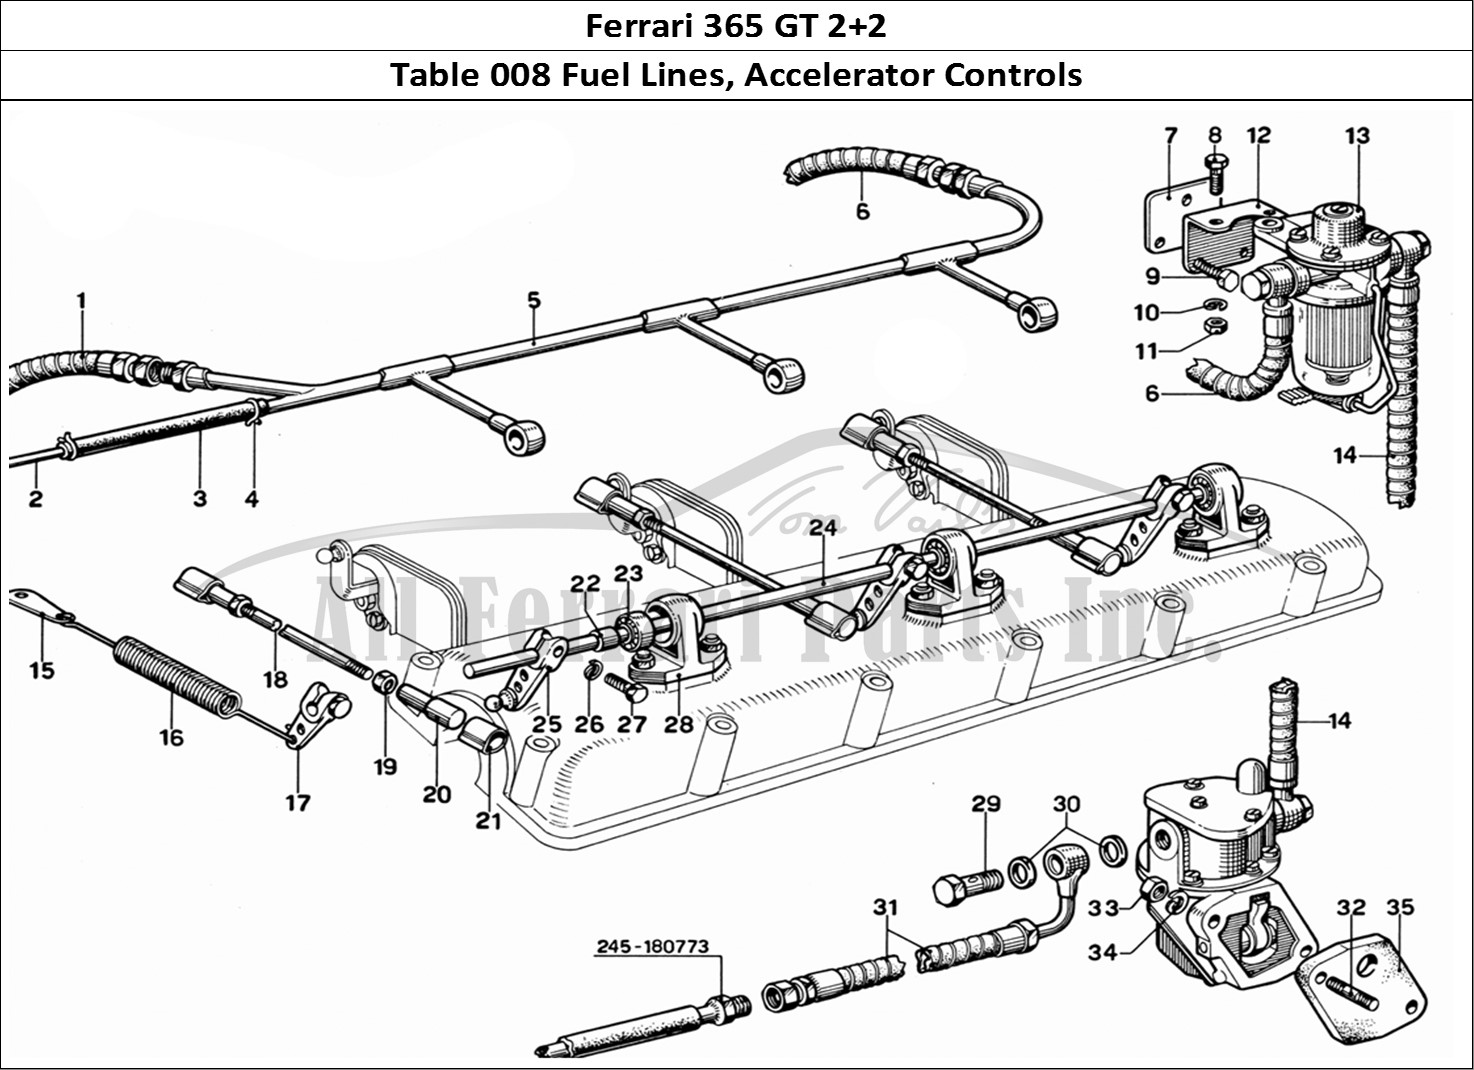 Ferrari Parts Ferrari 365 GT 2+2 (Mechanical) Page 008 Feeding and Controls